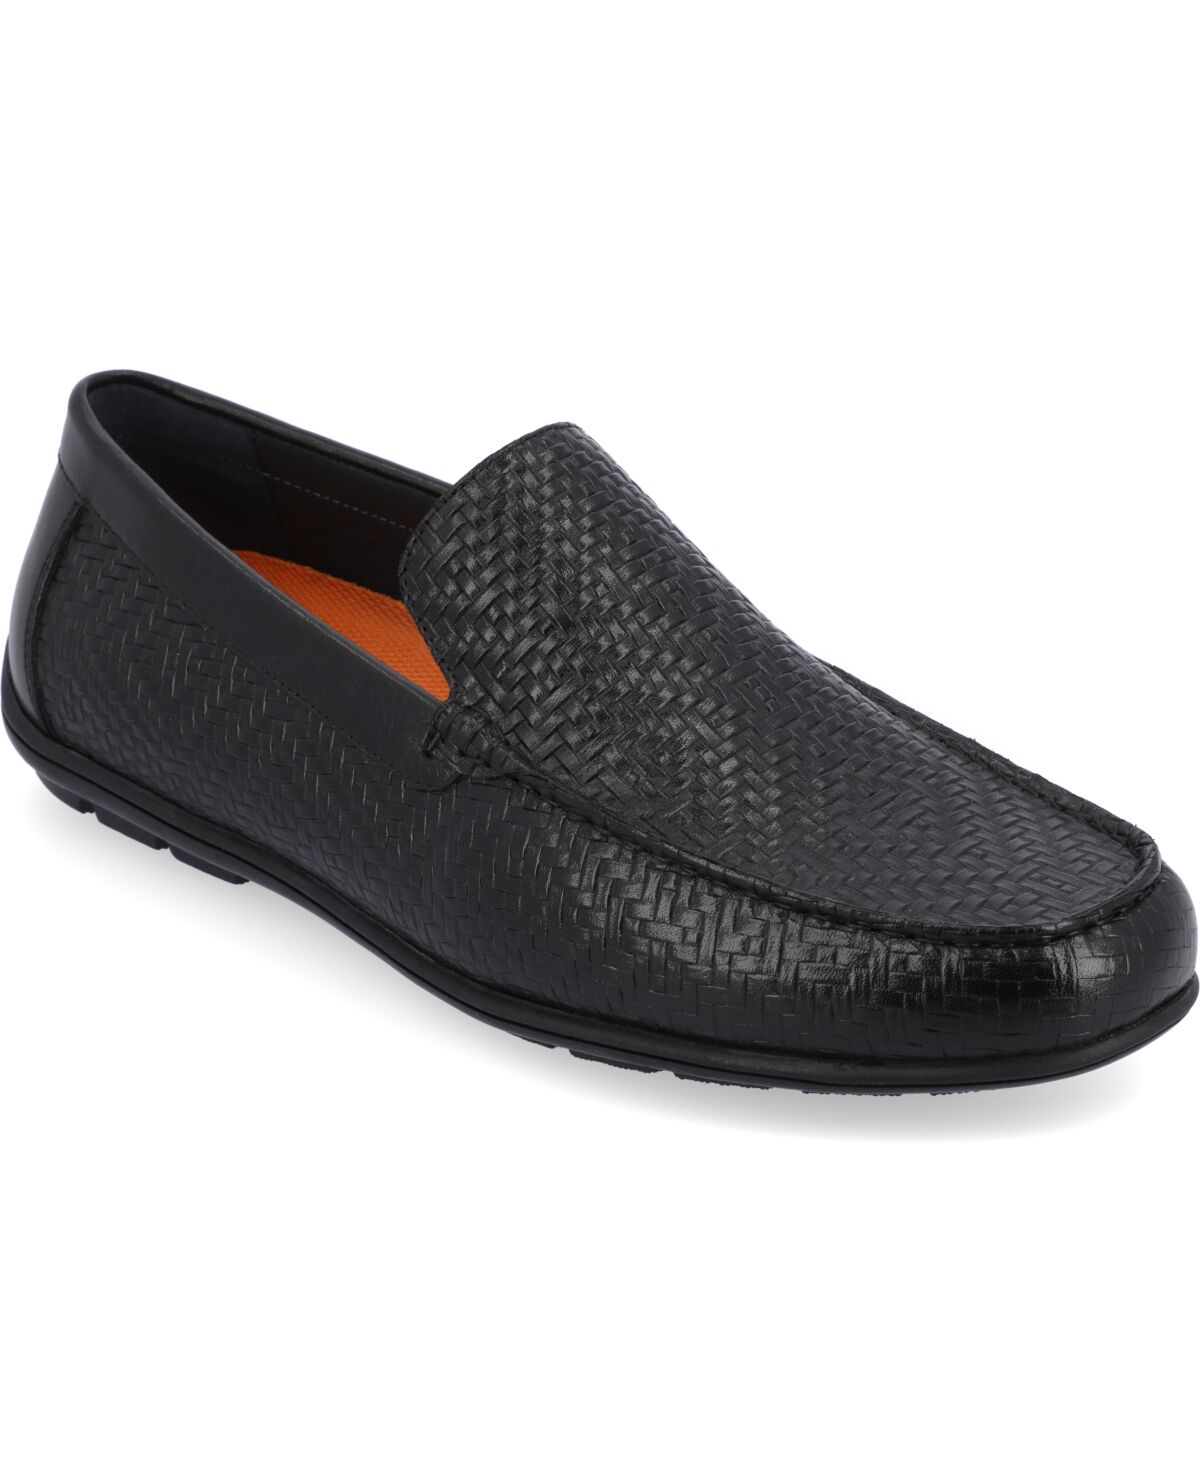 Thomas & Vine Men's Carter Moc Toe Driving Loafer Dress Shoes - Black